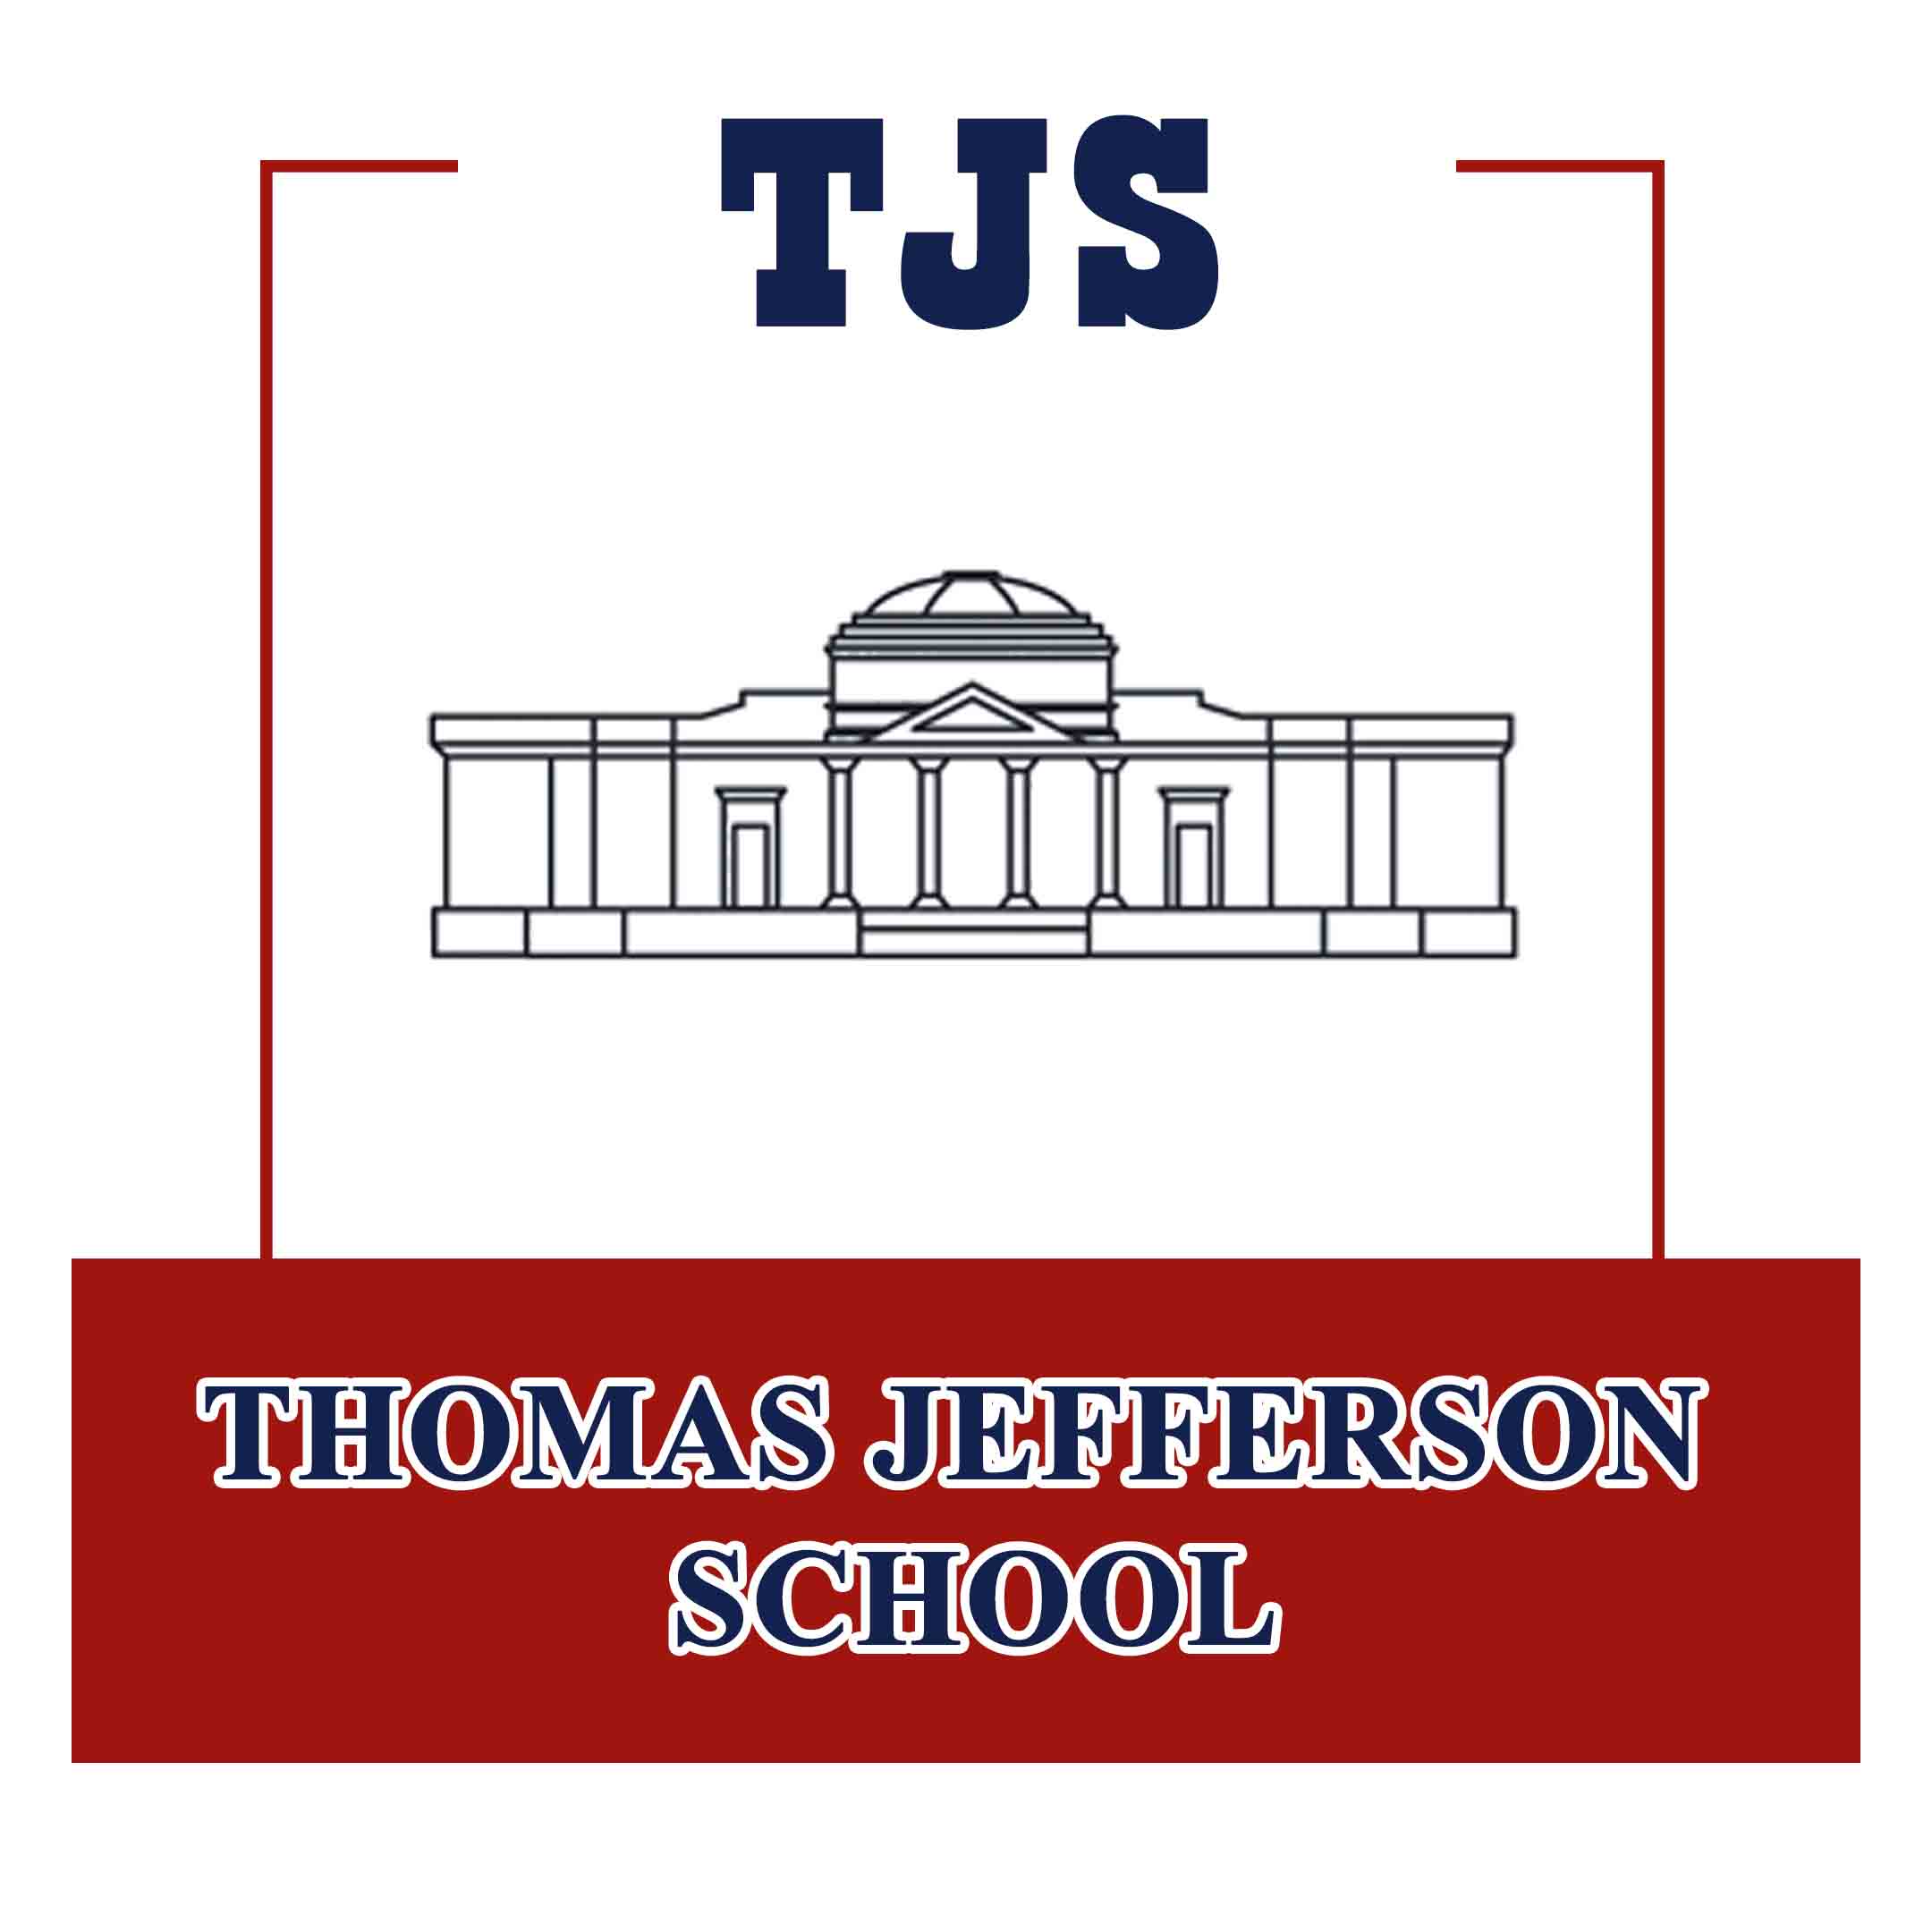 THOMAS JEFFERSON SCHOOL